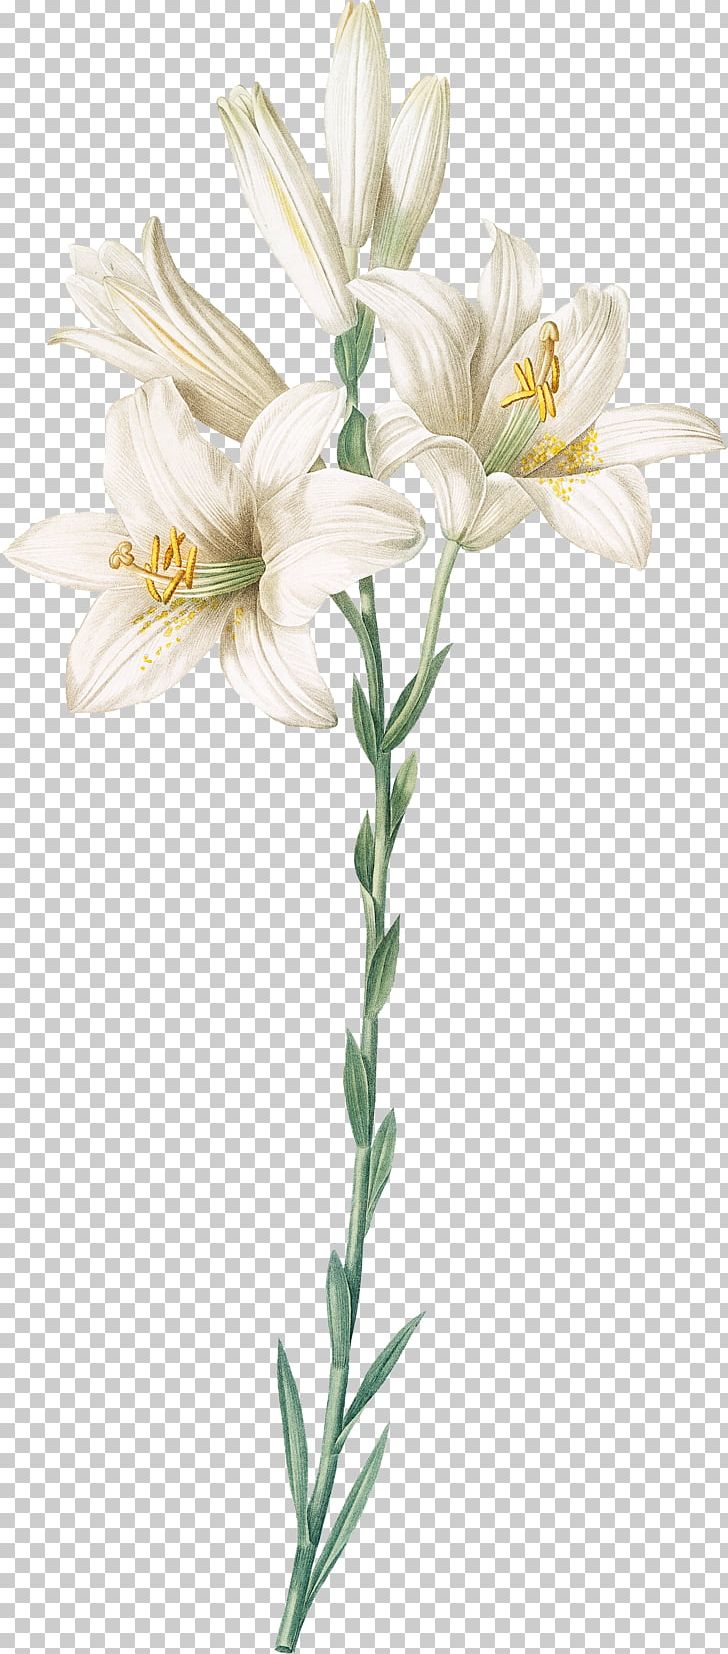 Madonna Lily Orange Lily Botanical Illustration Botany Cut Flowers PNG, Clipart, Amaryllis, Botanical Illustration, Botany, Cut Flowers, Drawing Free PNG Download